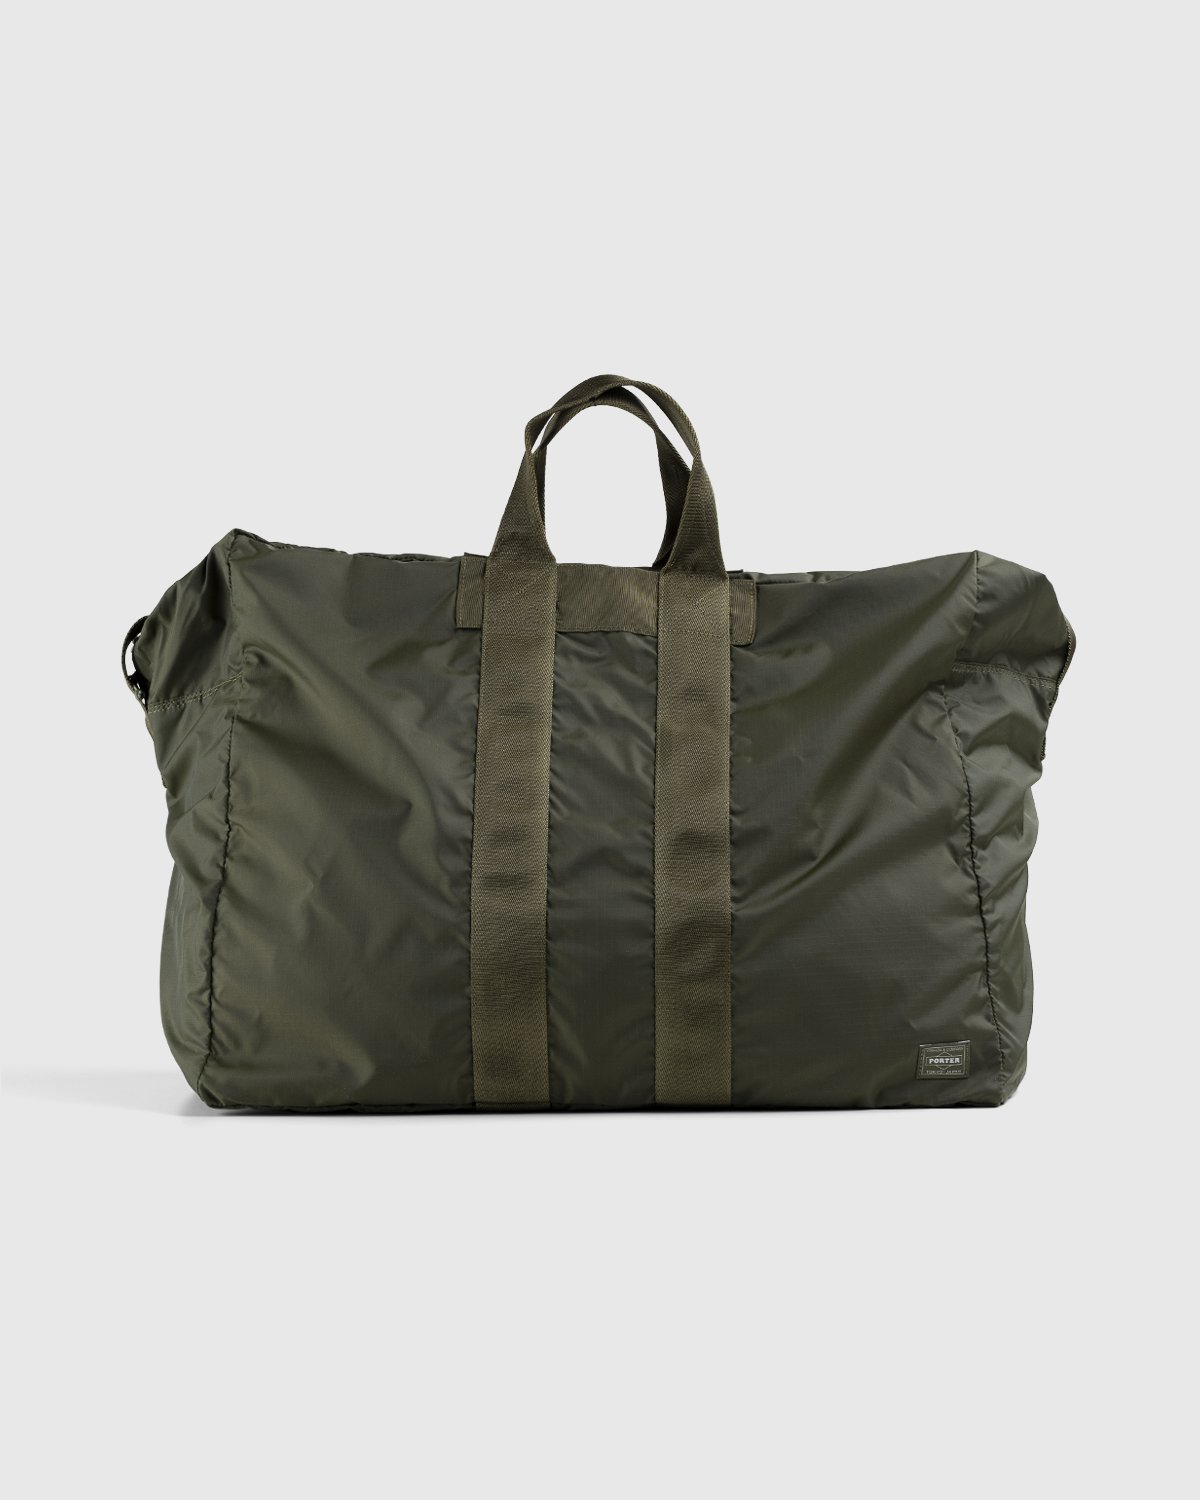 Porter-Yoshida & Co. - Flex 2-Way Duffle Bag Olive Drab - Accessories - Green - Image 1